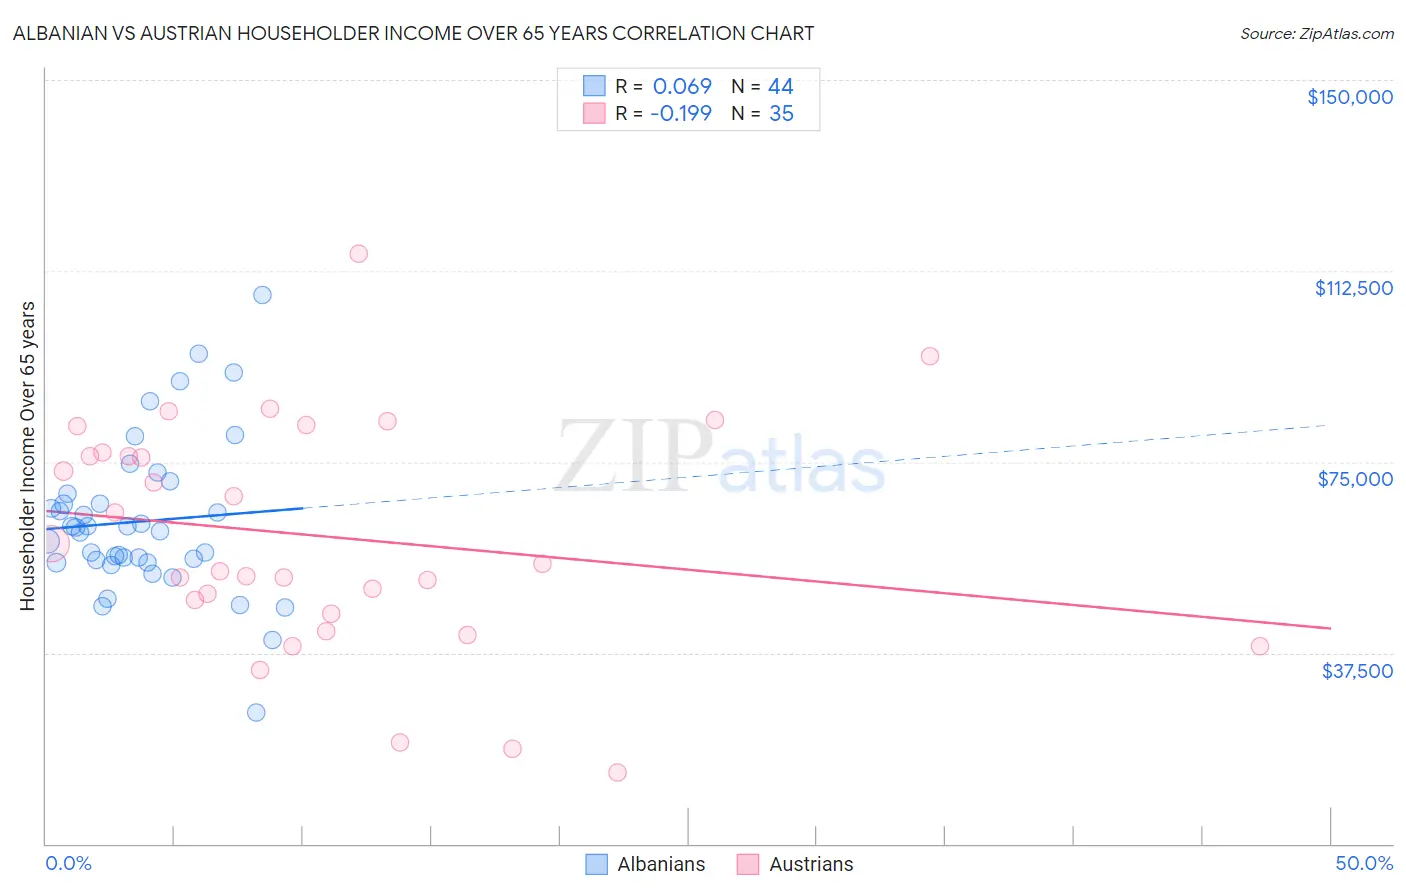 Albanian vs Austrian Householder Income Over 65 years